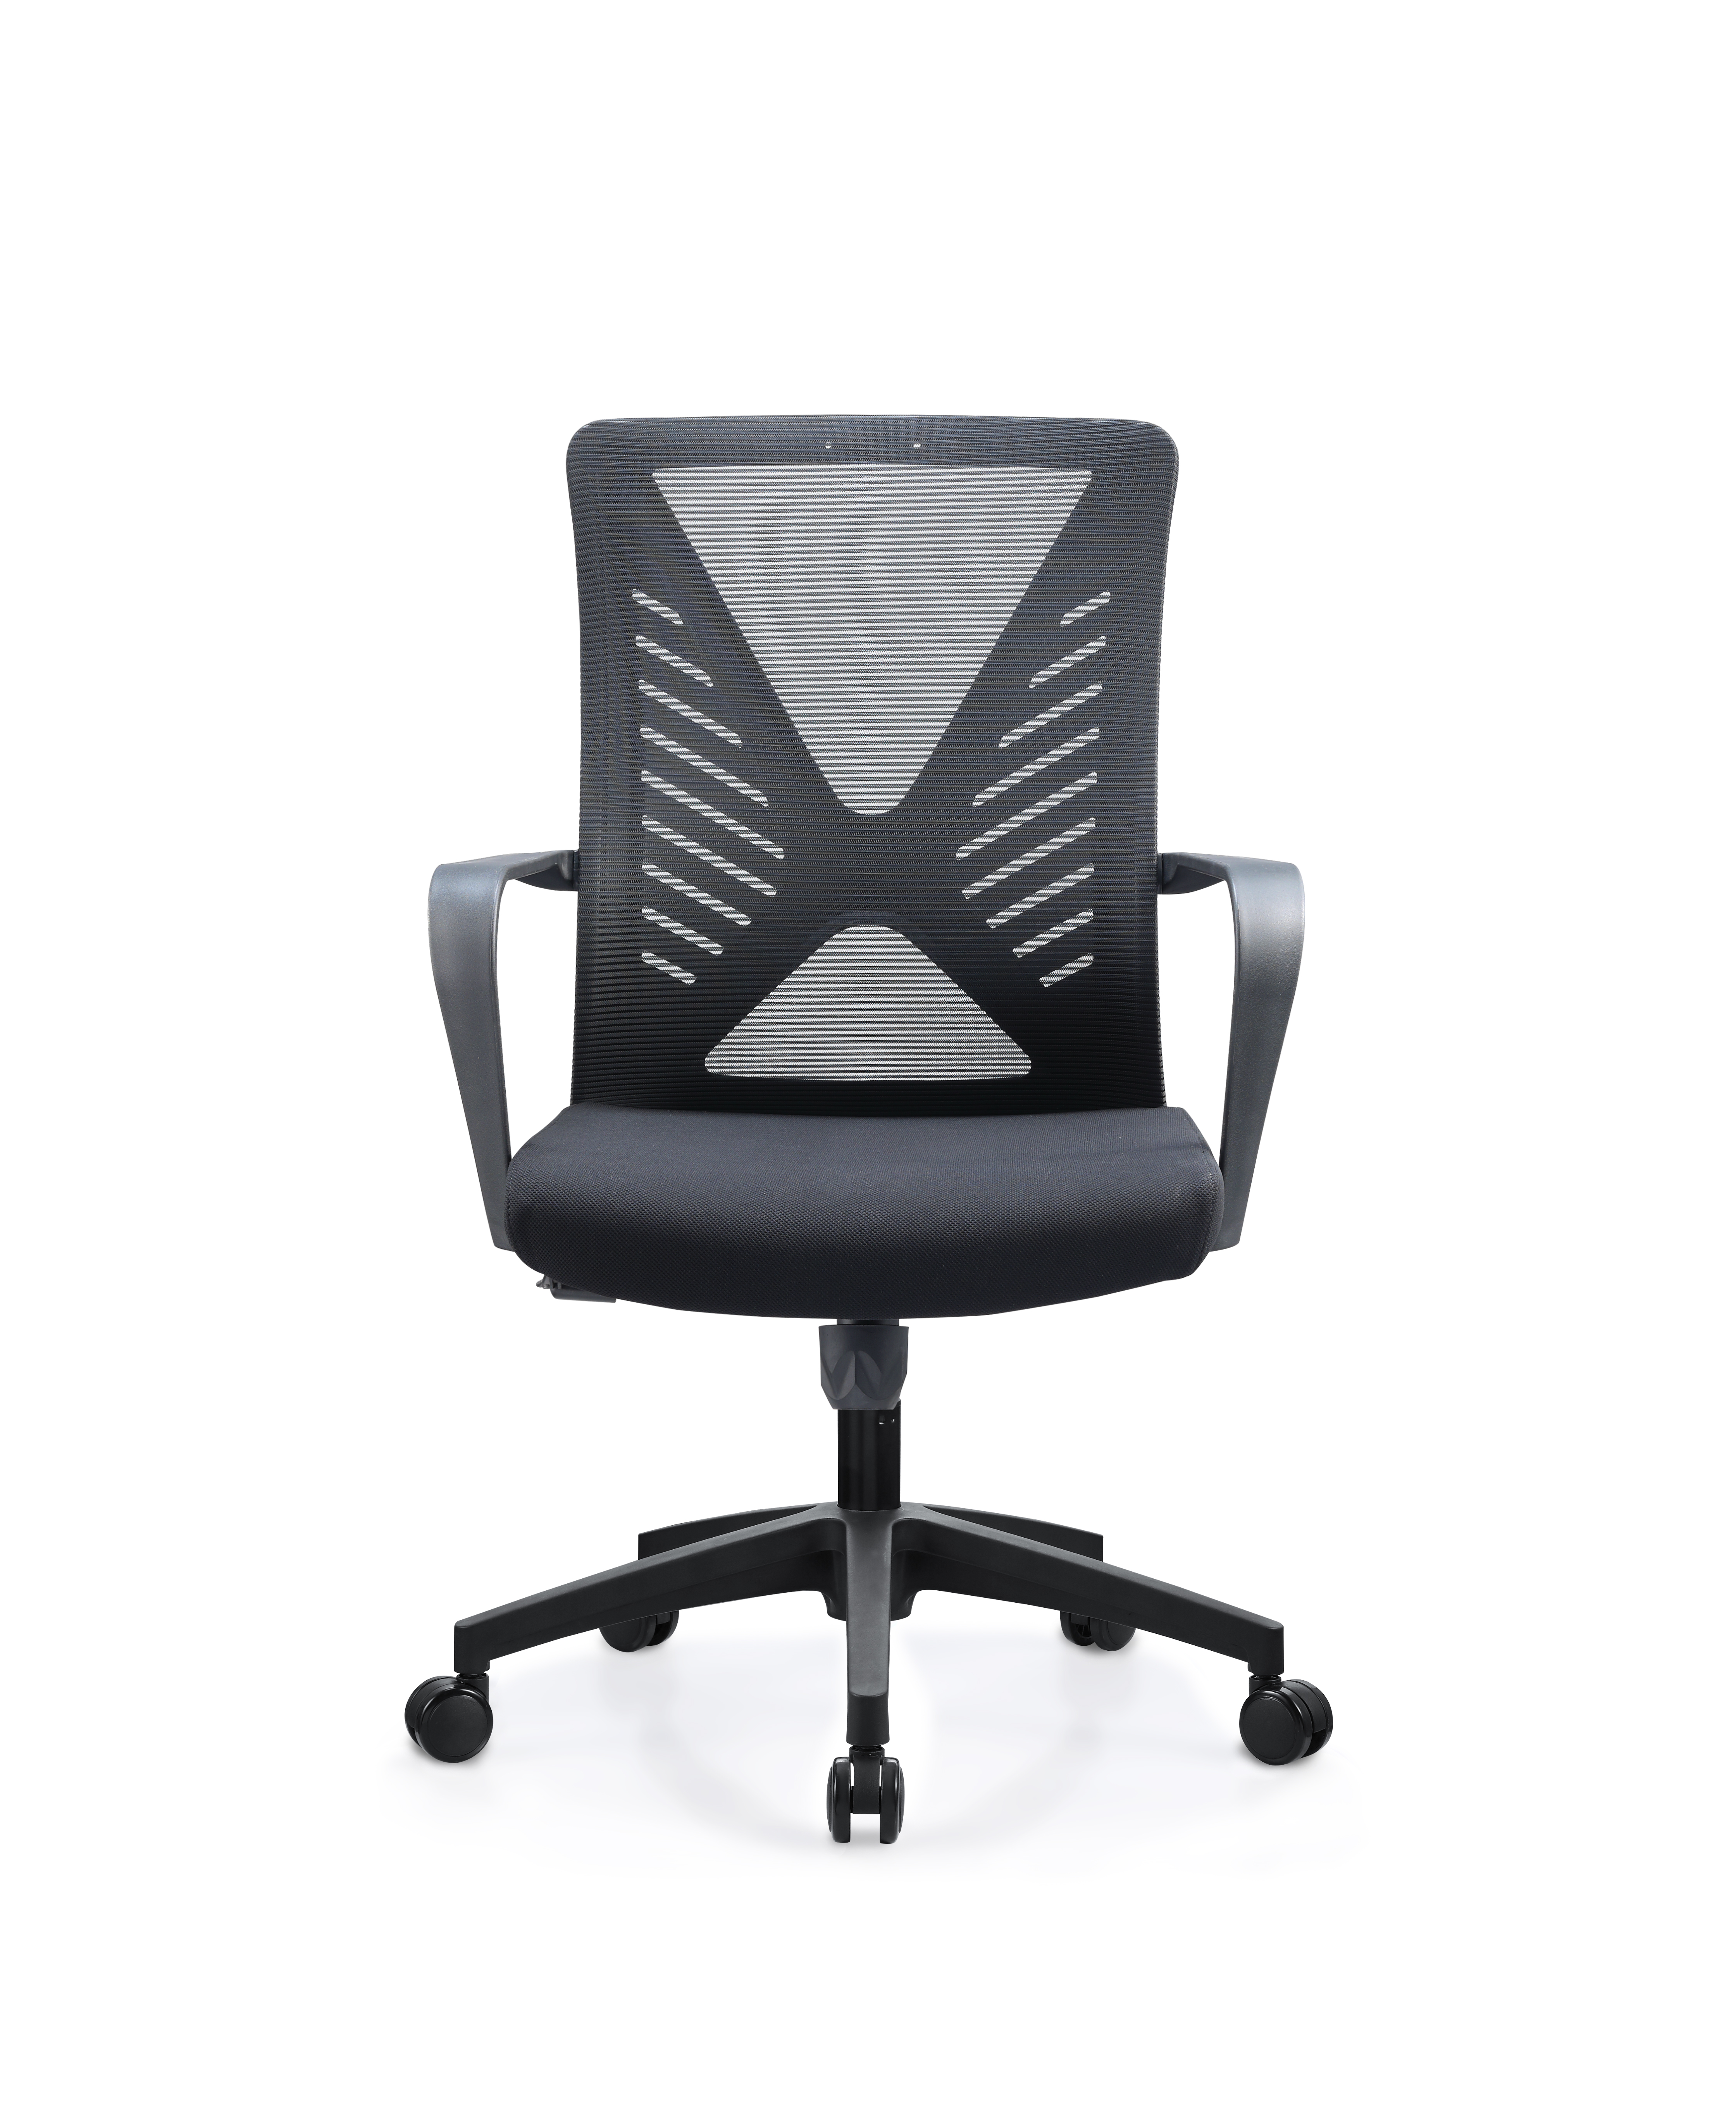 Newcity 559B بالجملة كرسي شبكي حديث قابل للتعديل كرسي شبكي تنفيذي كرسي دوار مدير شبكي كرسي شبكي خلفي متوسط ​​المورد فوشان الصين